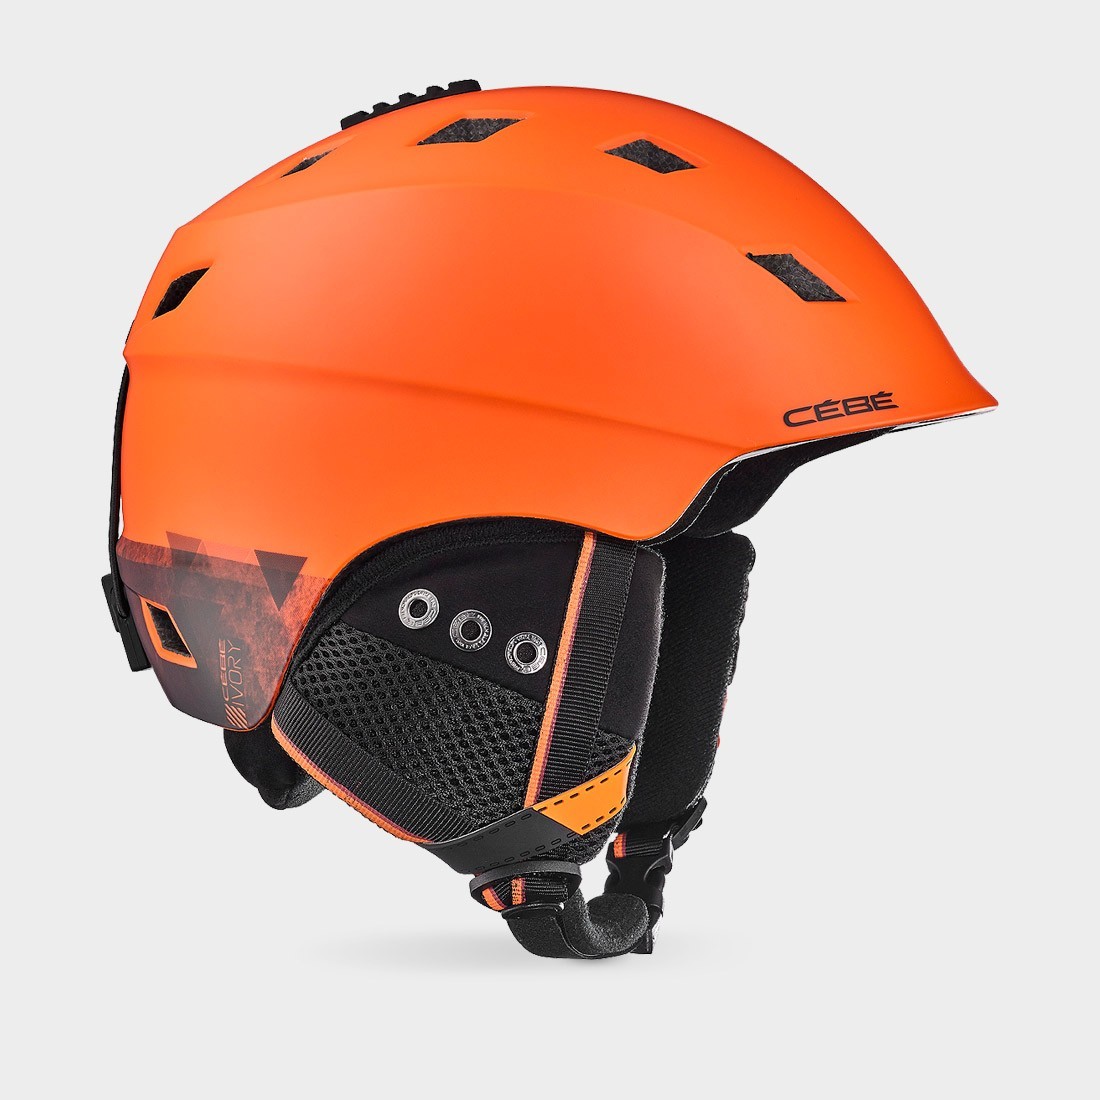 cebe-ivory-helmet-ski-all-mountain-orange